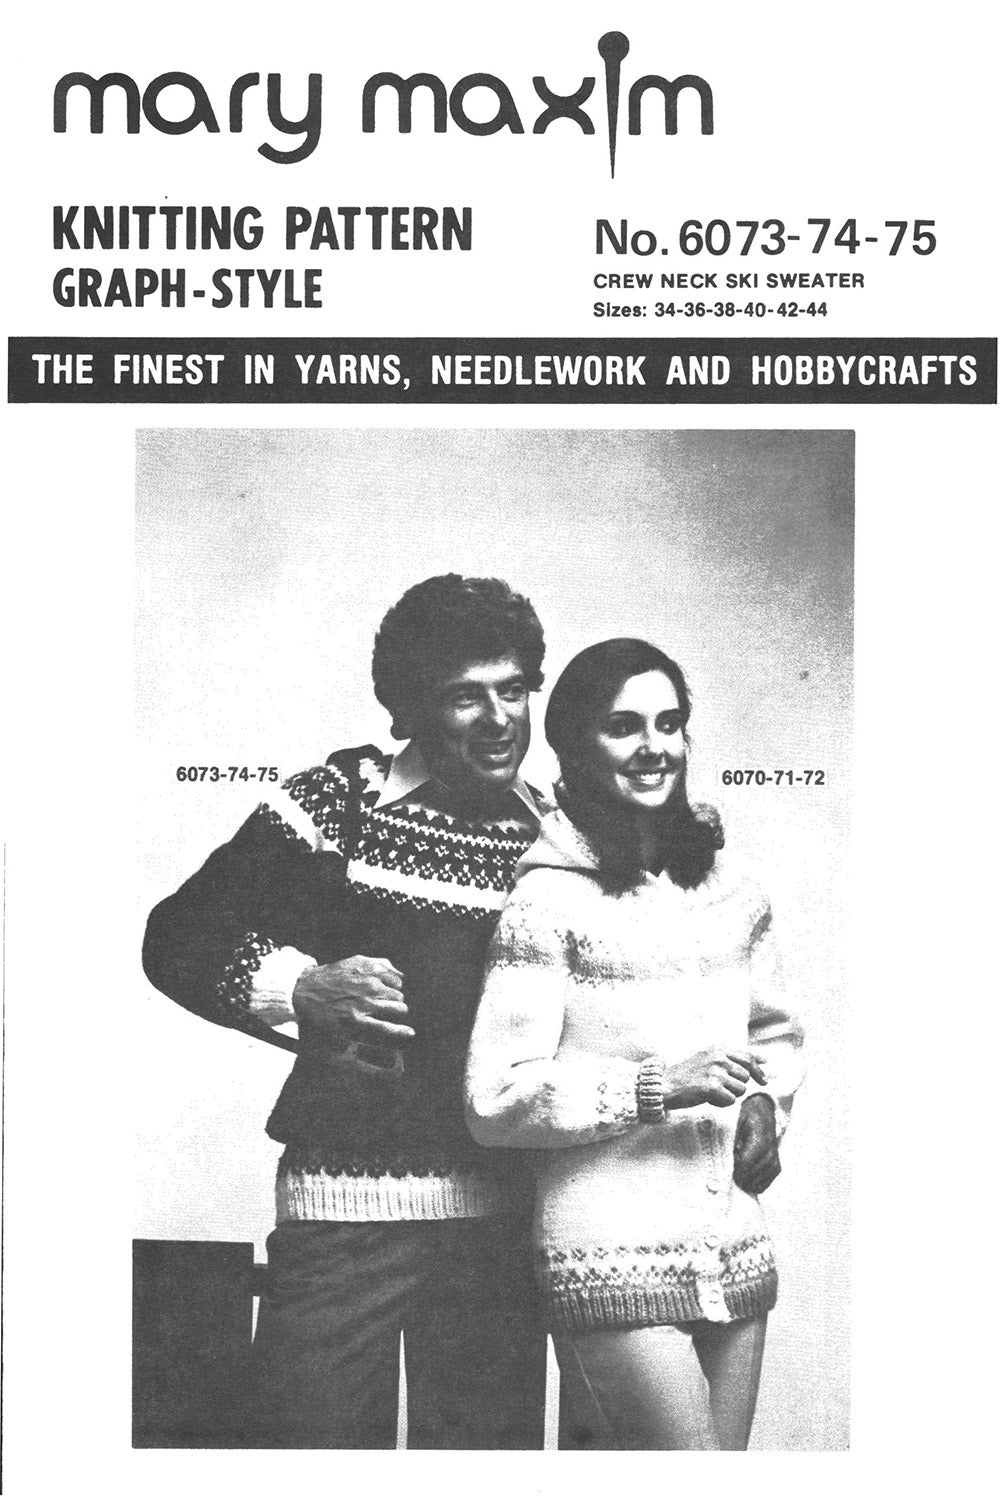 Crew Neck Ski Sweater Pattern